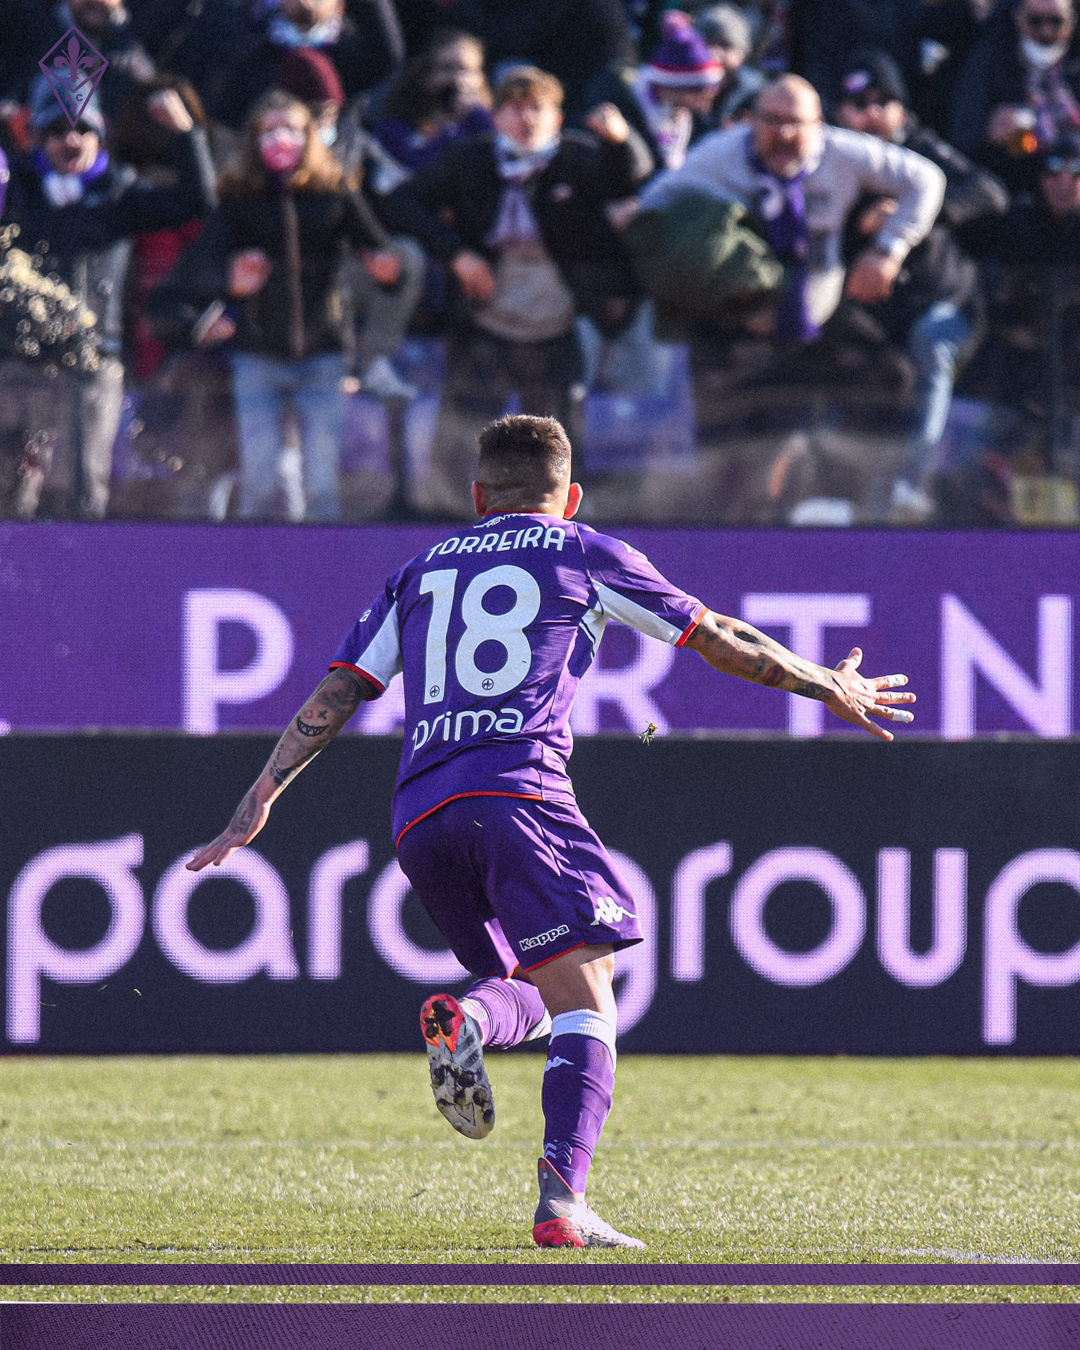 crediti immagine: Twitter ufficiale Fiorentina